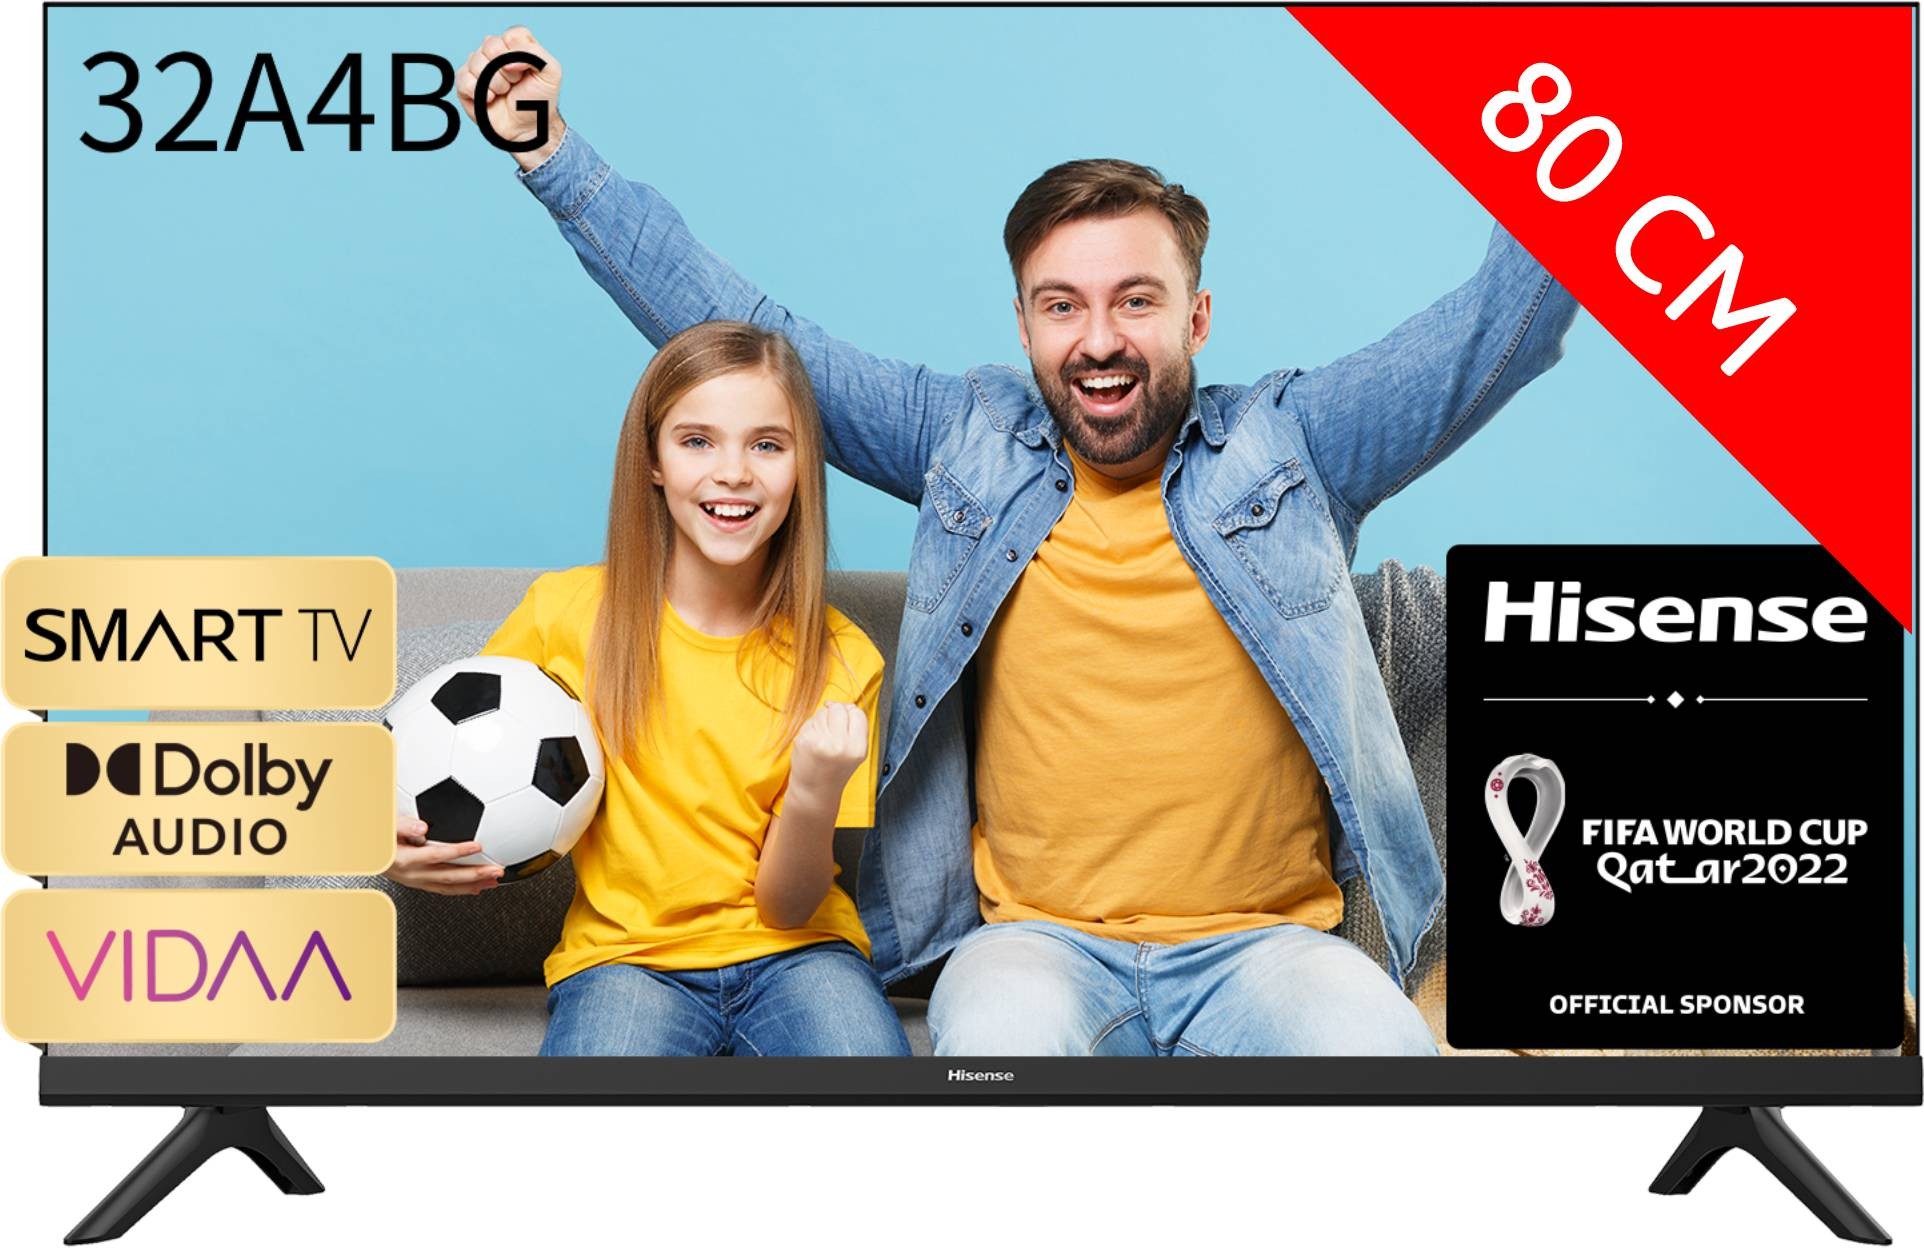 HISENSE TV LED Full HD 80 cm   32A4BG